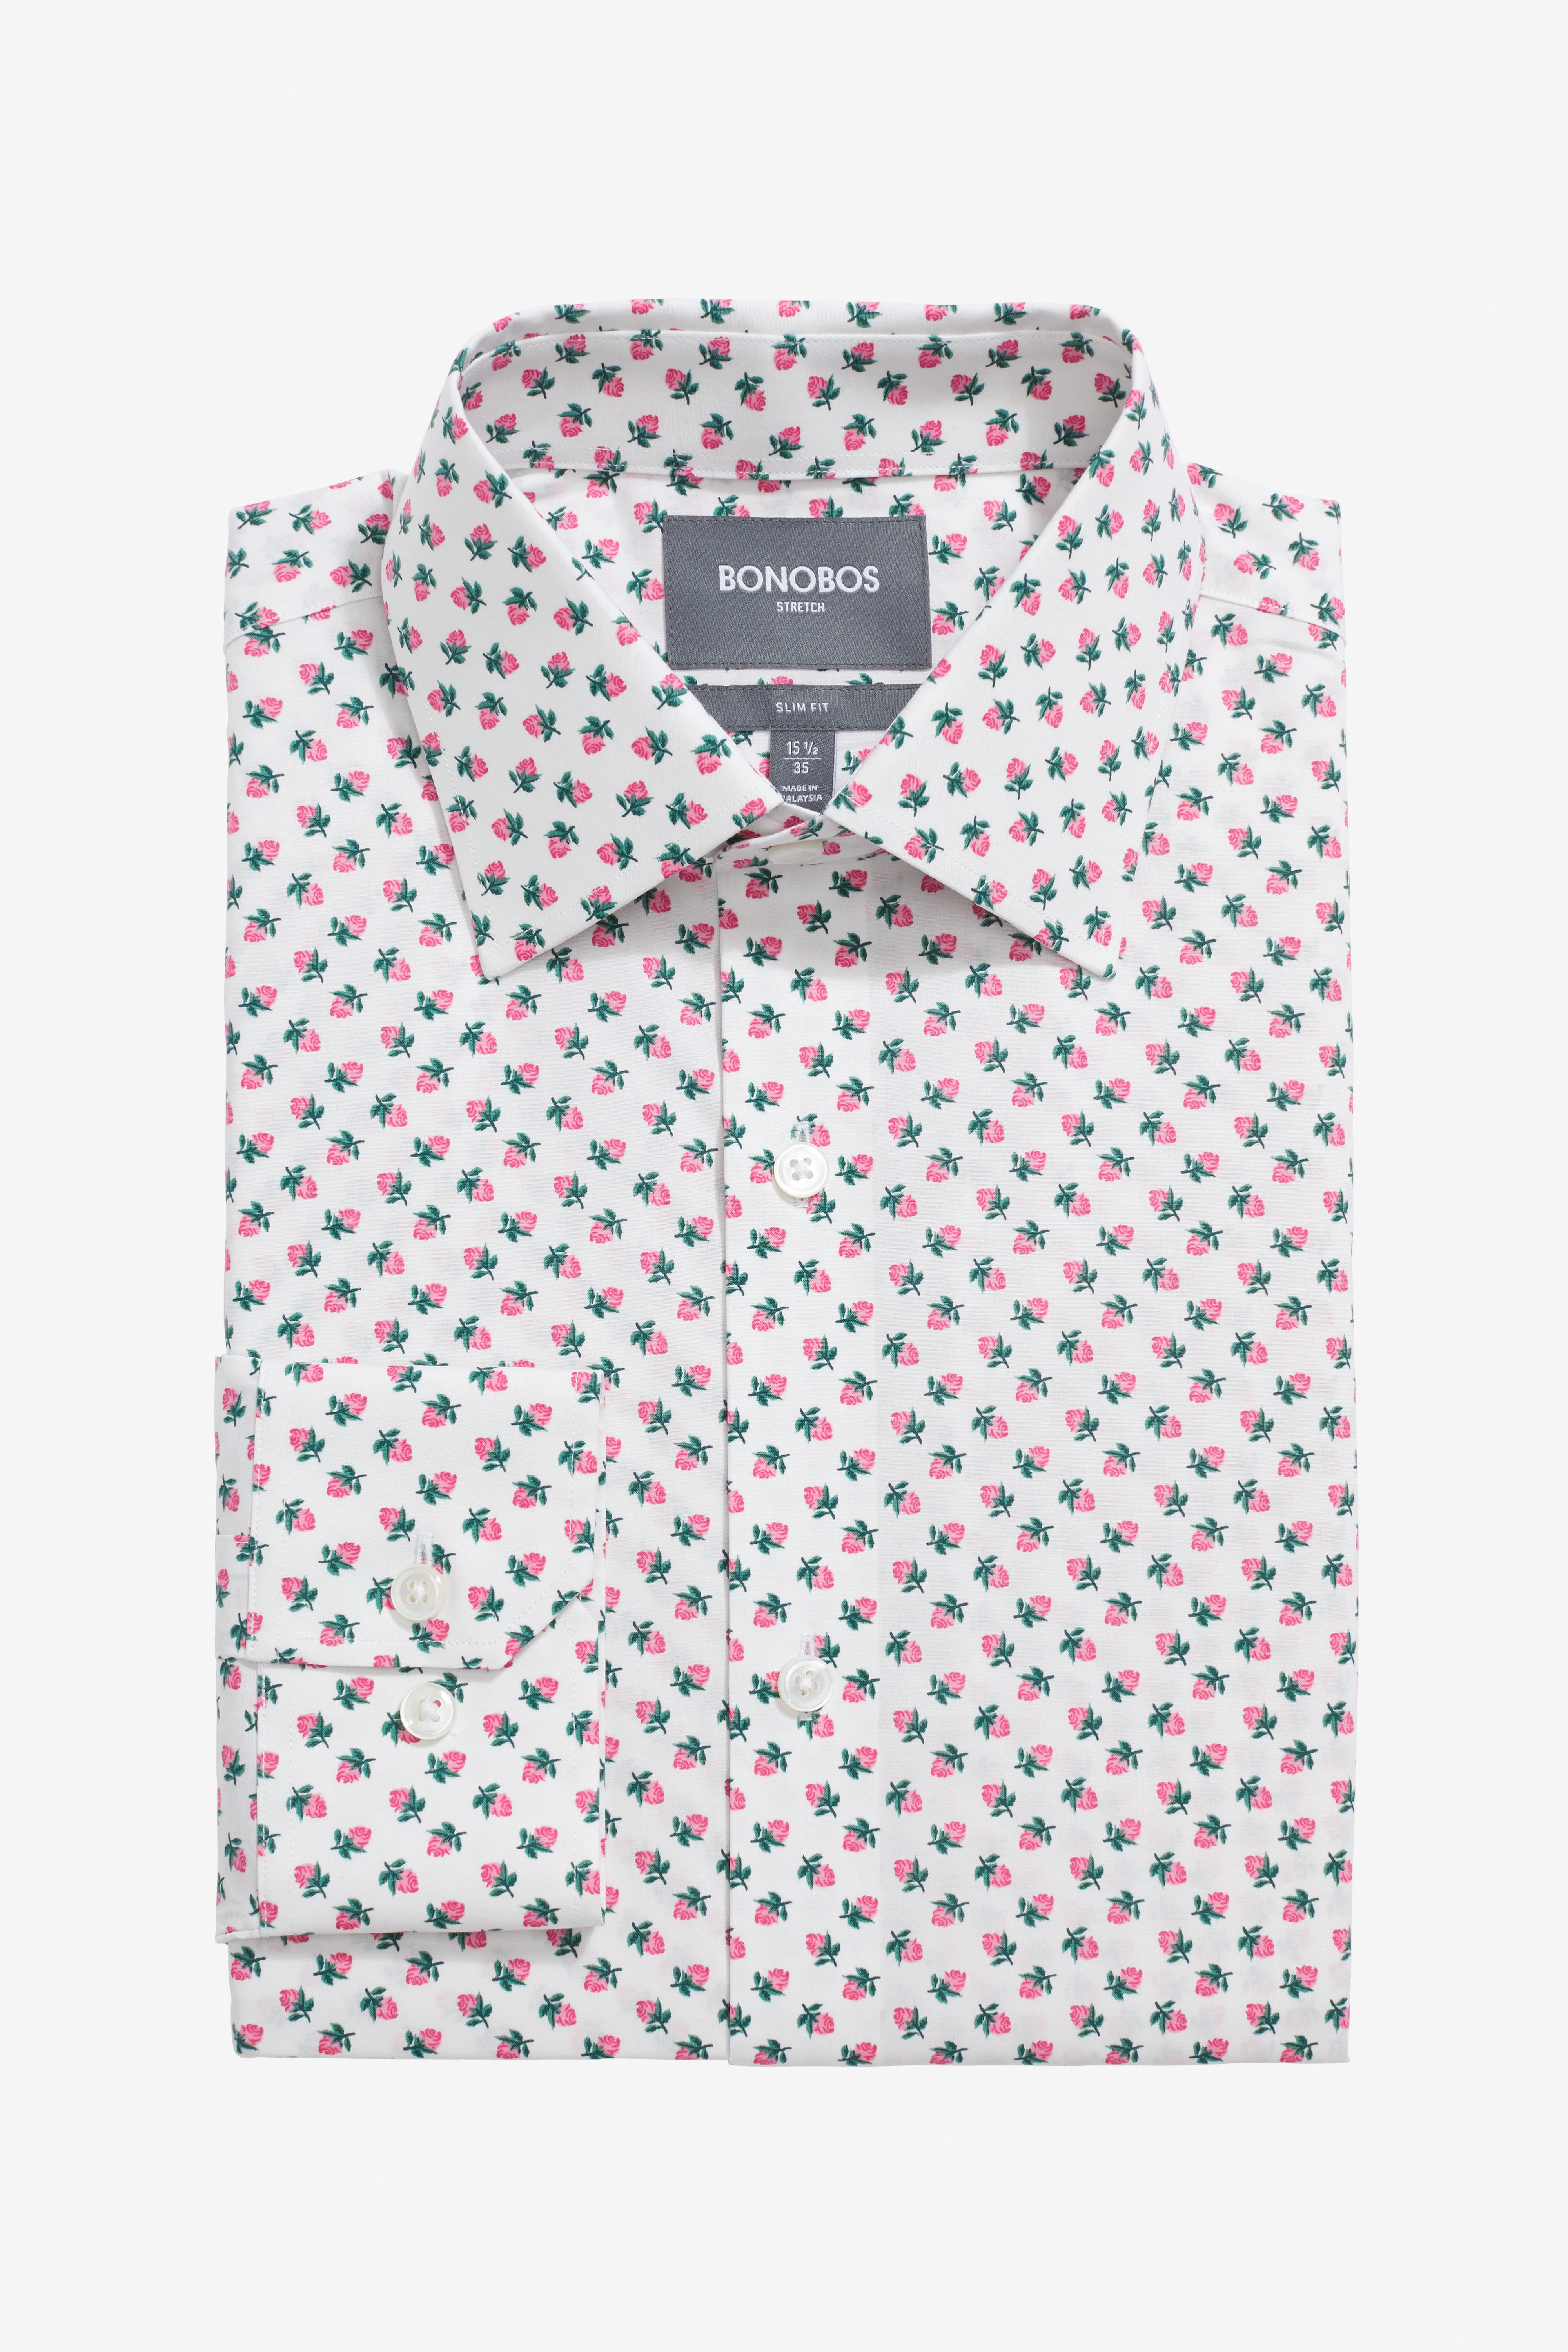 Jetsetter Stretch Dress Shirt Limited Edition | Bonobos